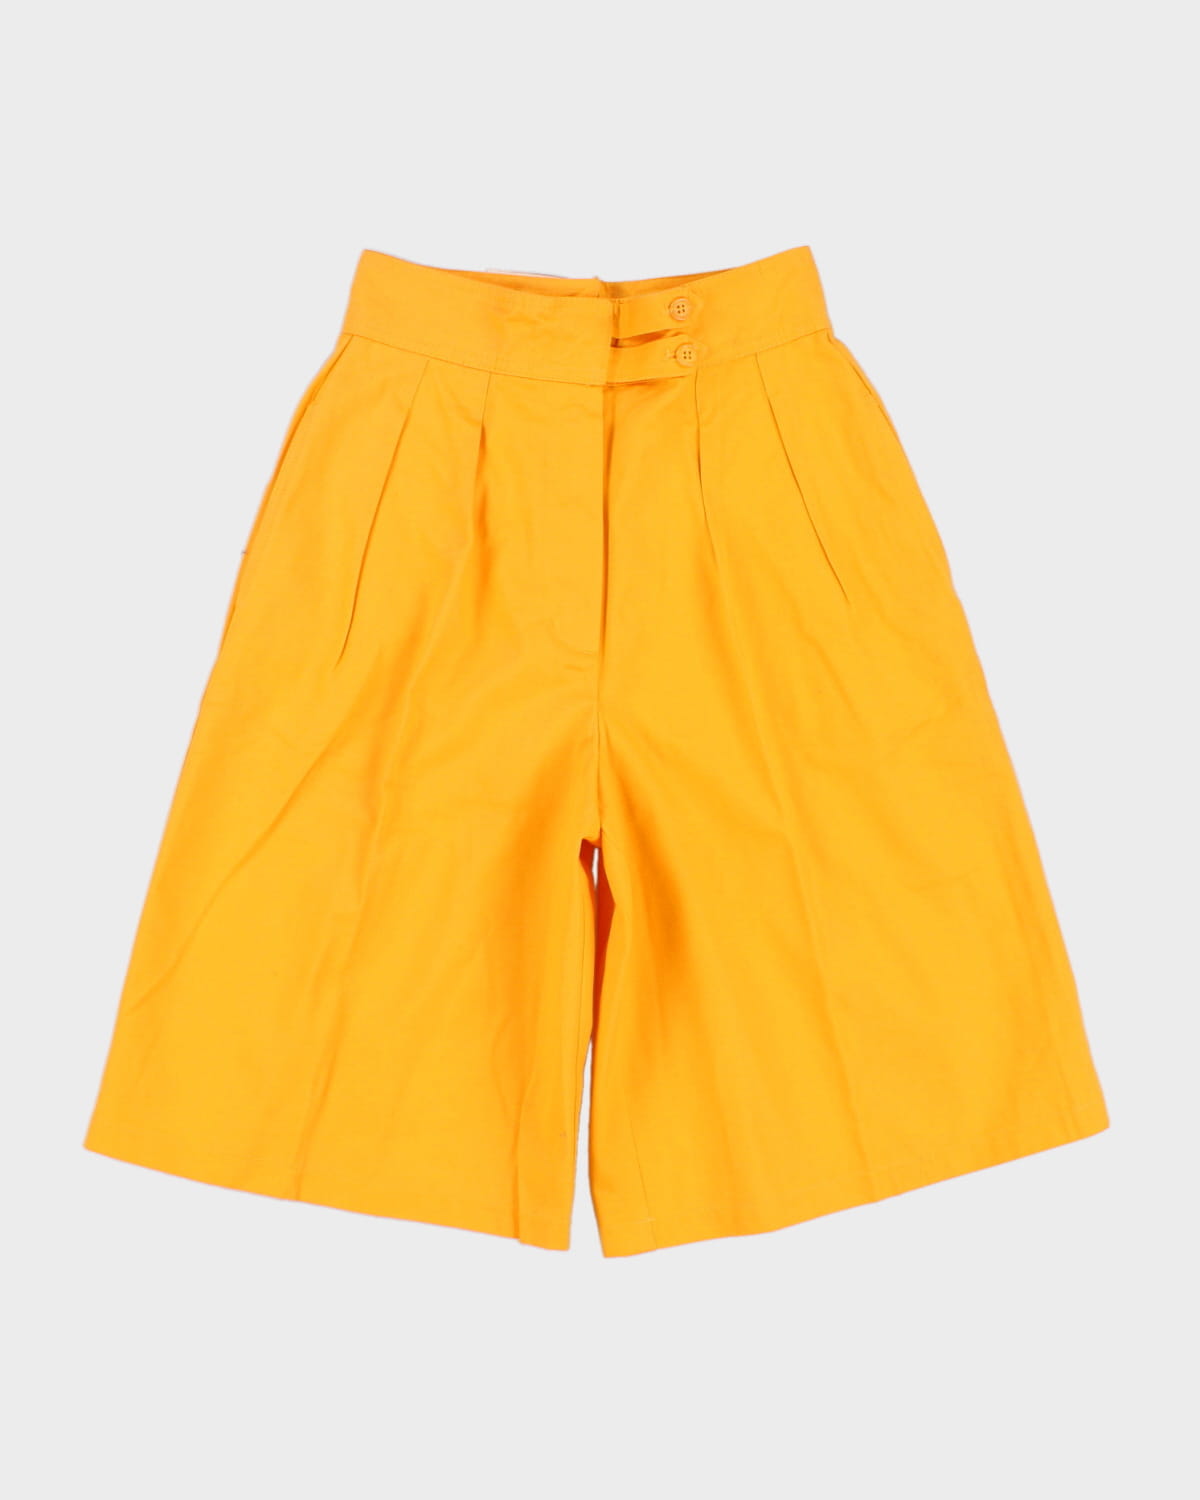 Vintage 70s Jean's West Yellow Pantaloon Shorts - S